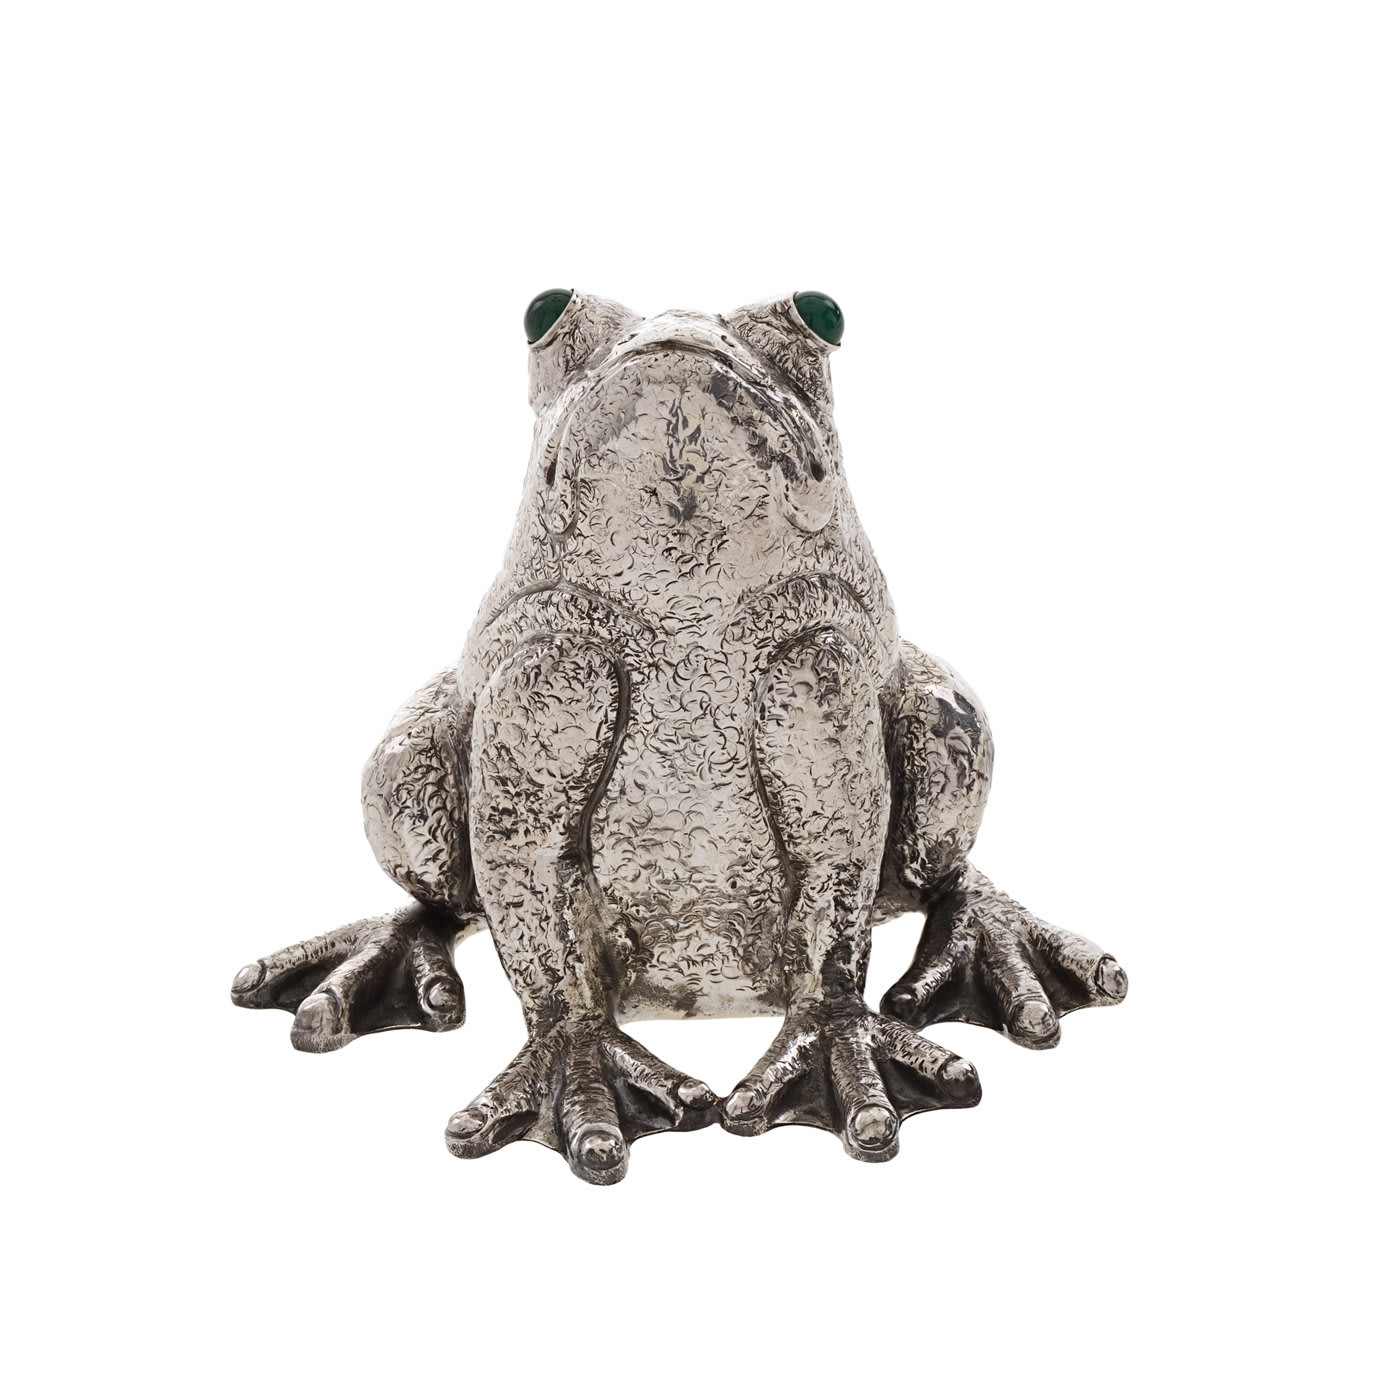 The Frog Sterling Silver Lighter - Fratelli Lisi